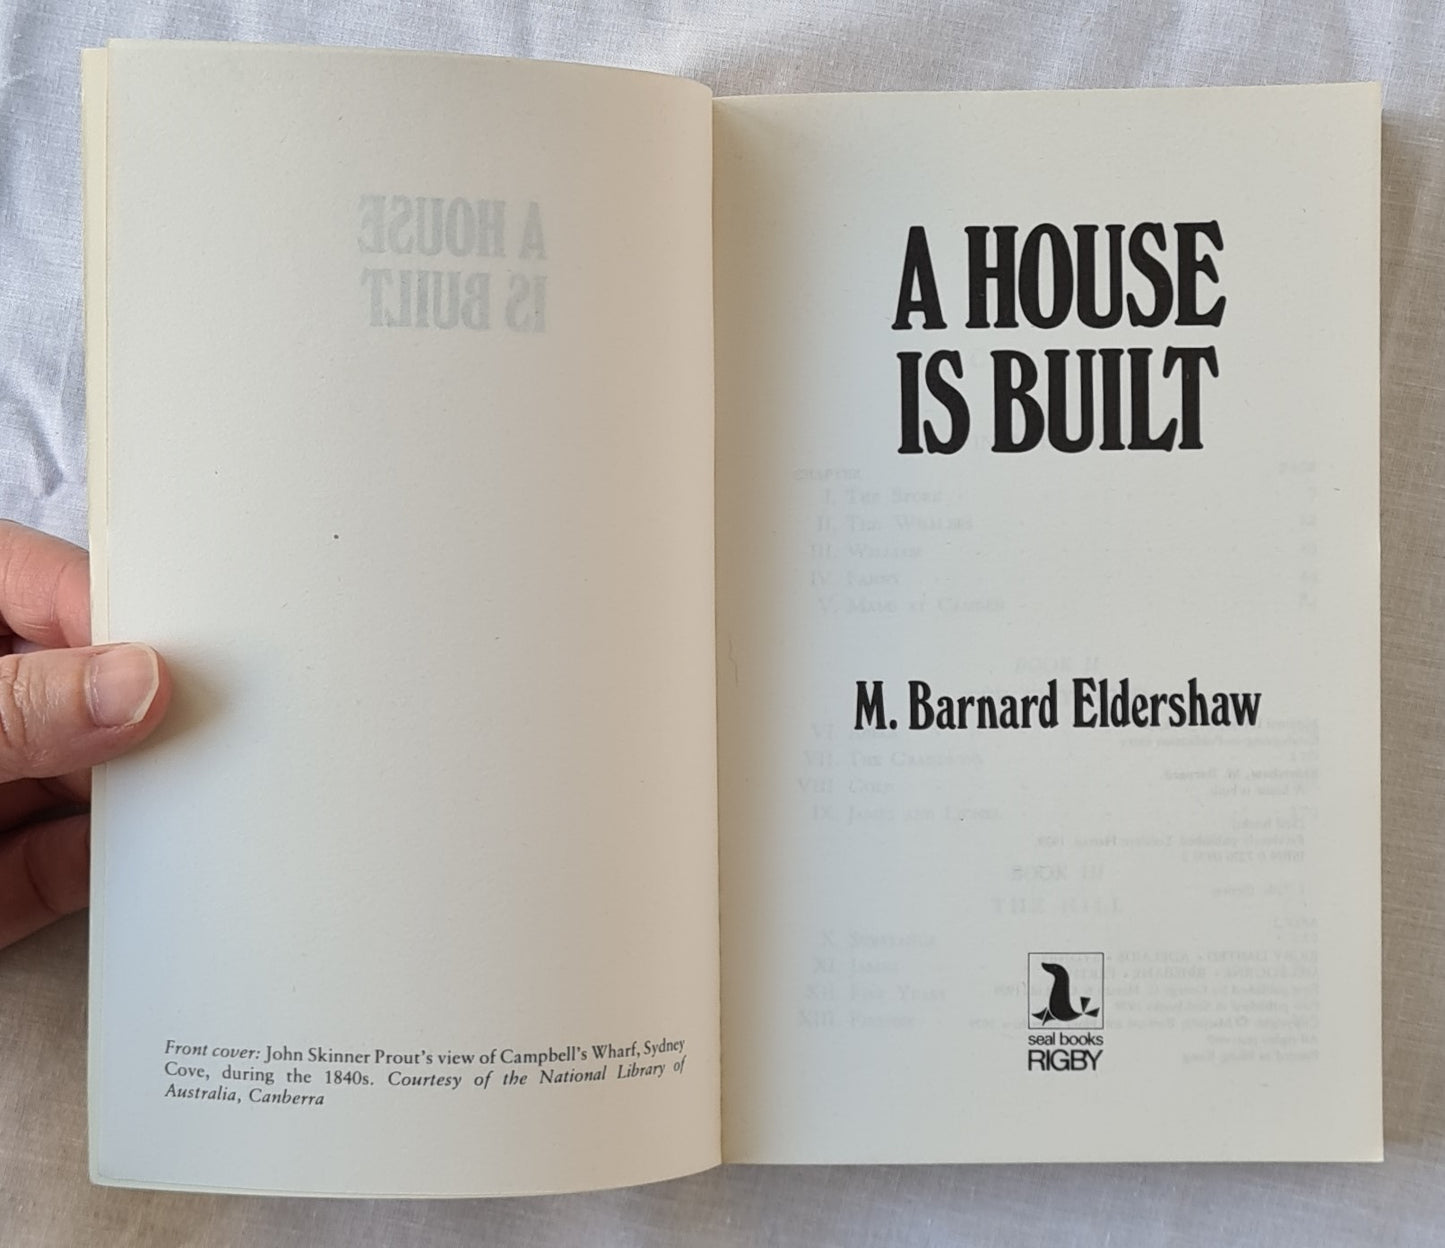 A House is Built by M. Barnard Eldershaw